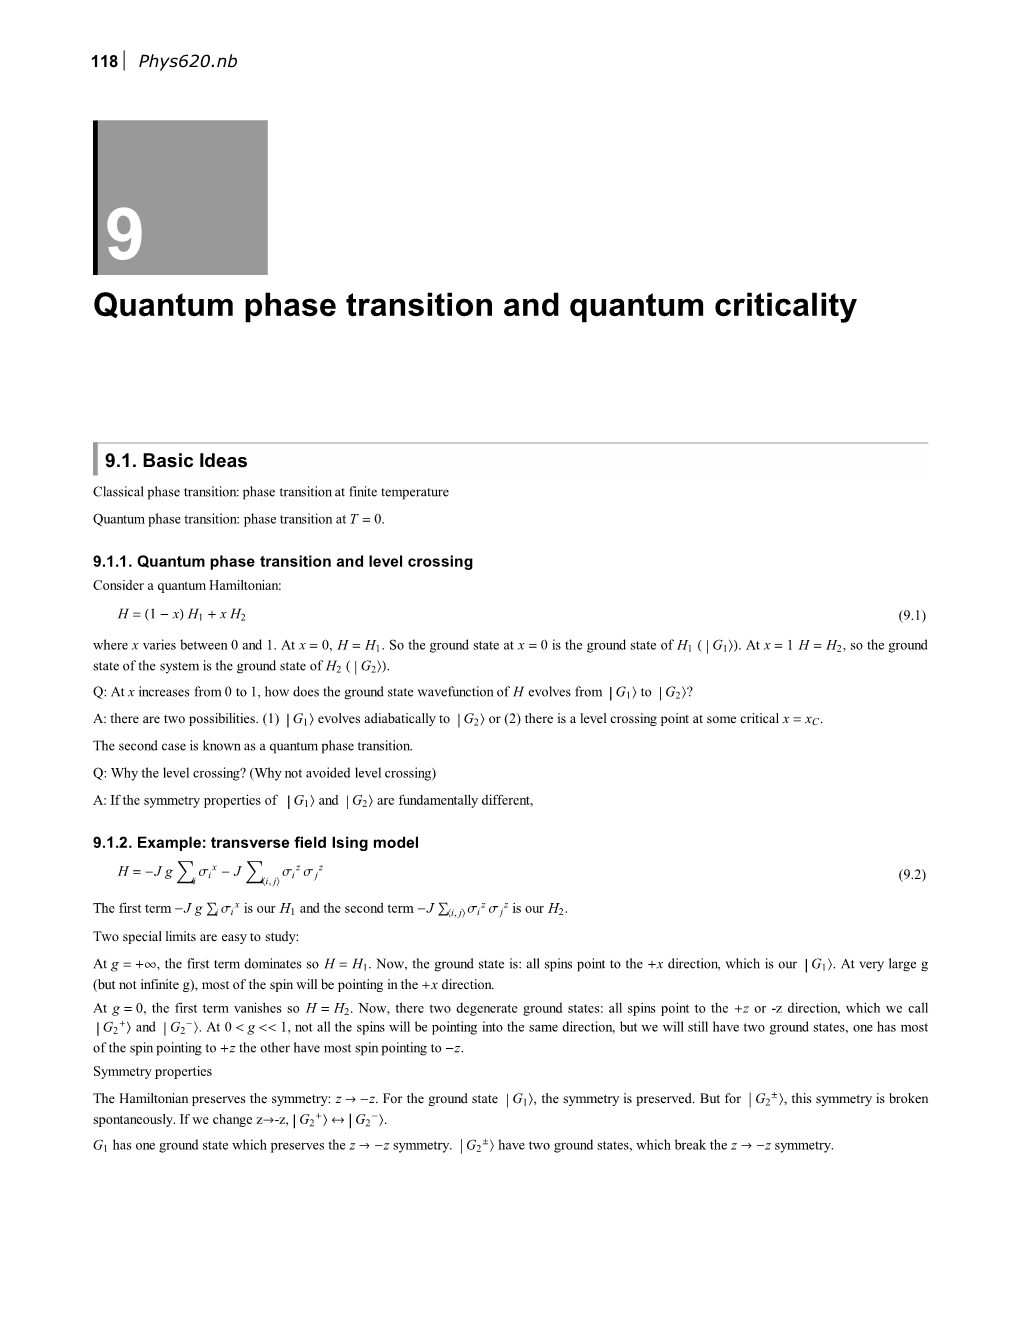 Quantum Phase Transition and Quantum Criticality